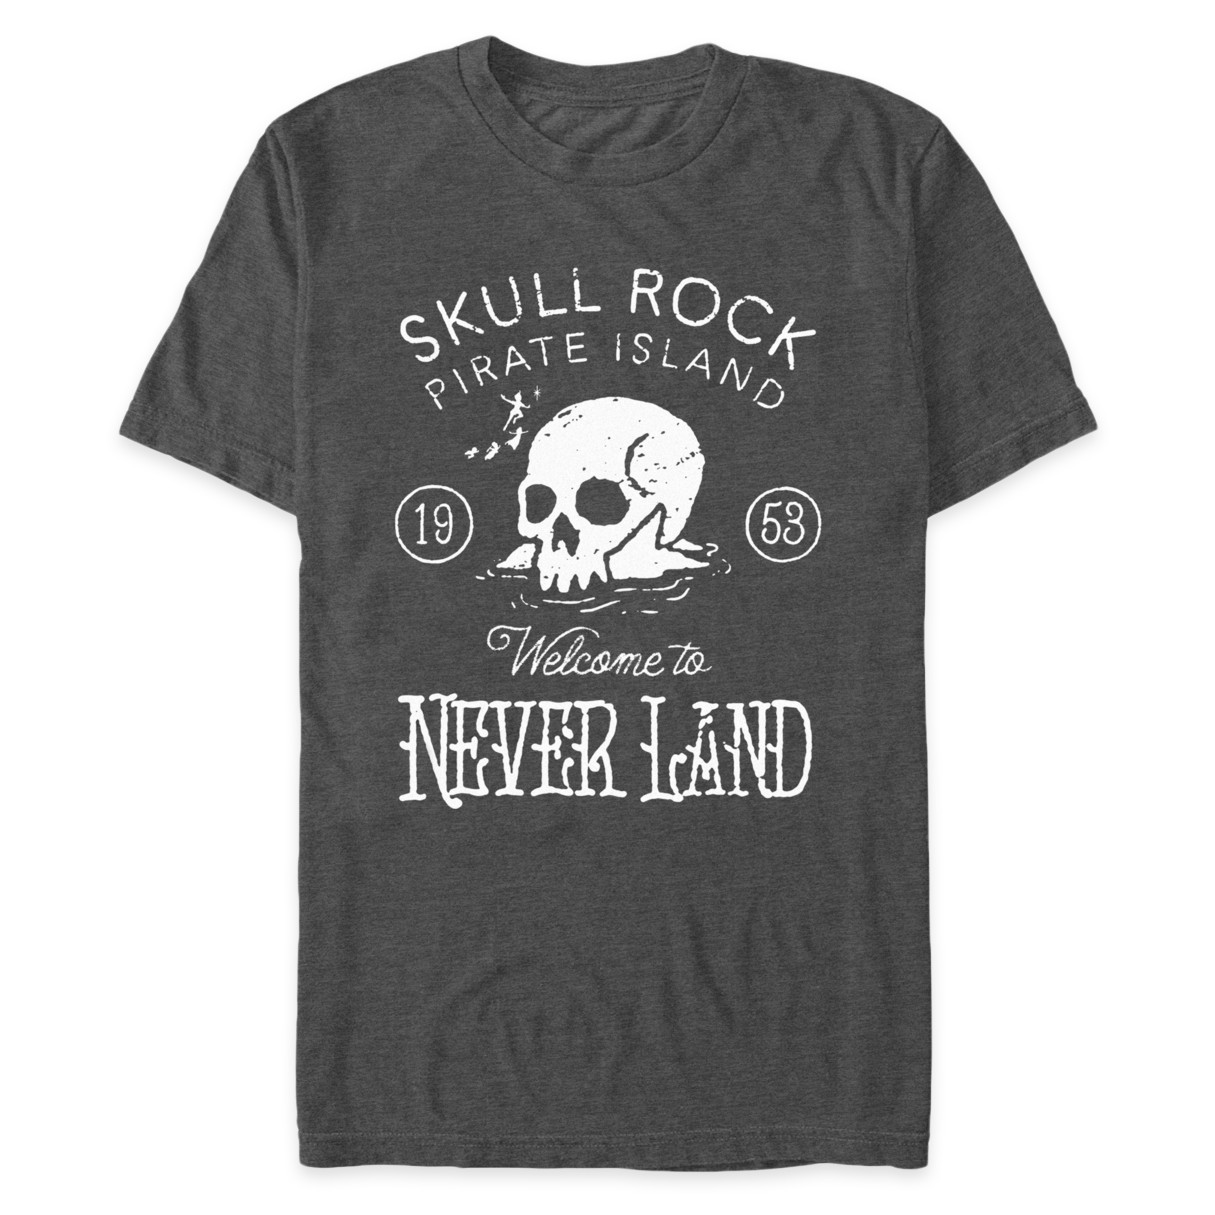 Skull Rock T-Shirt for Adults – Peter Pan